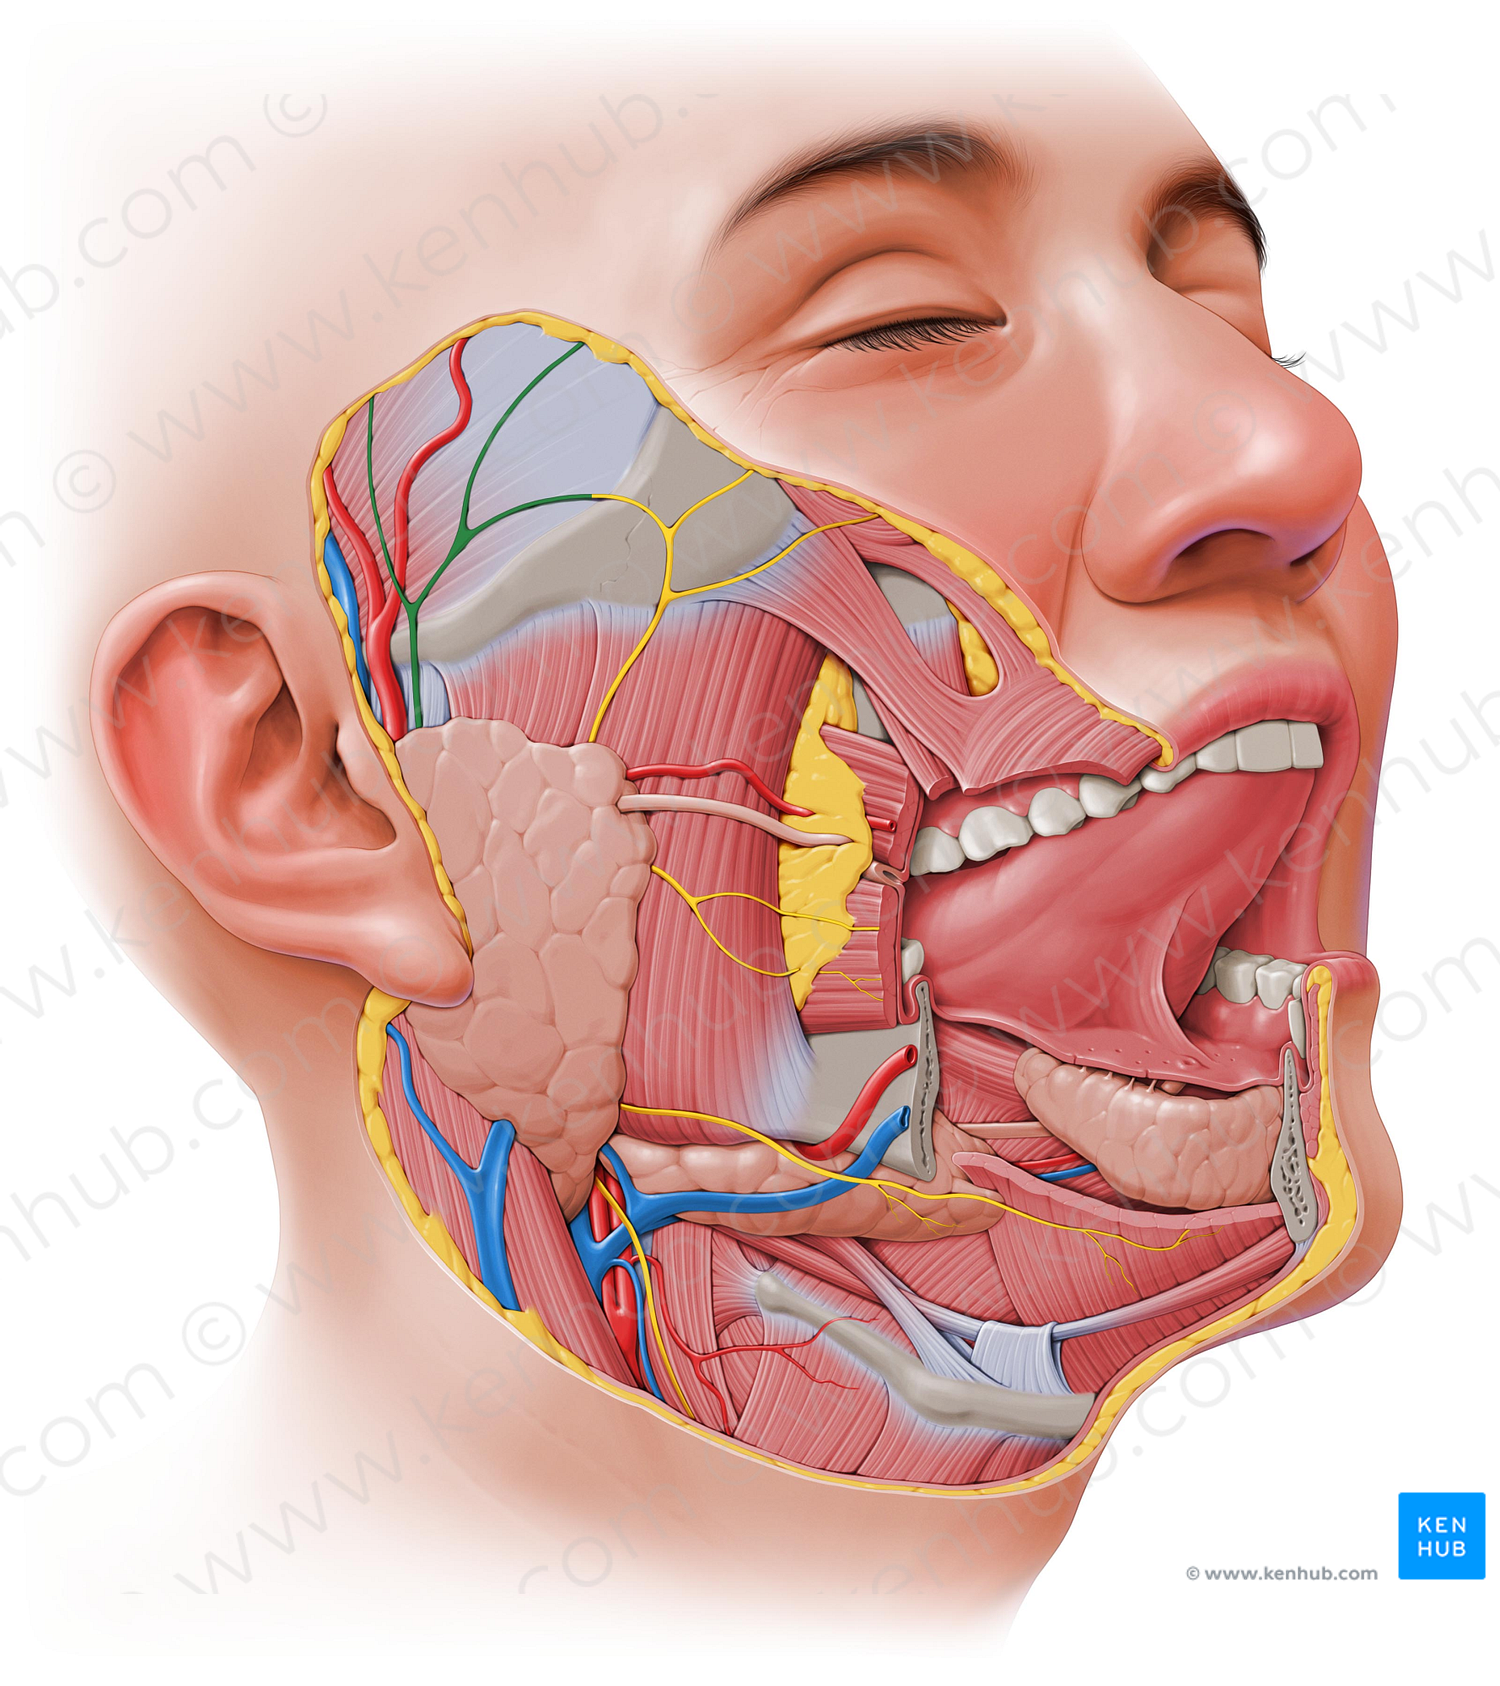 Temporal branches of facial nerve (#8574)